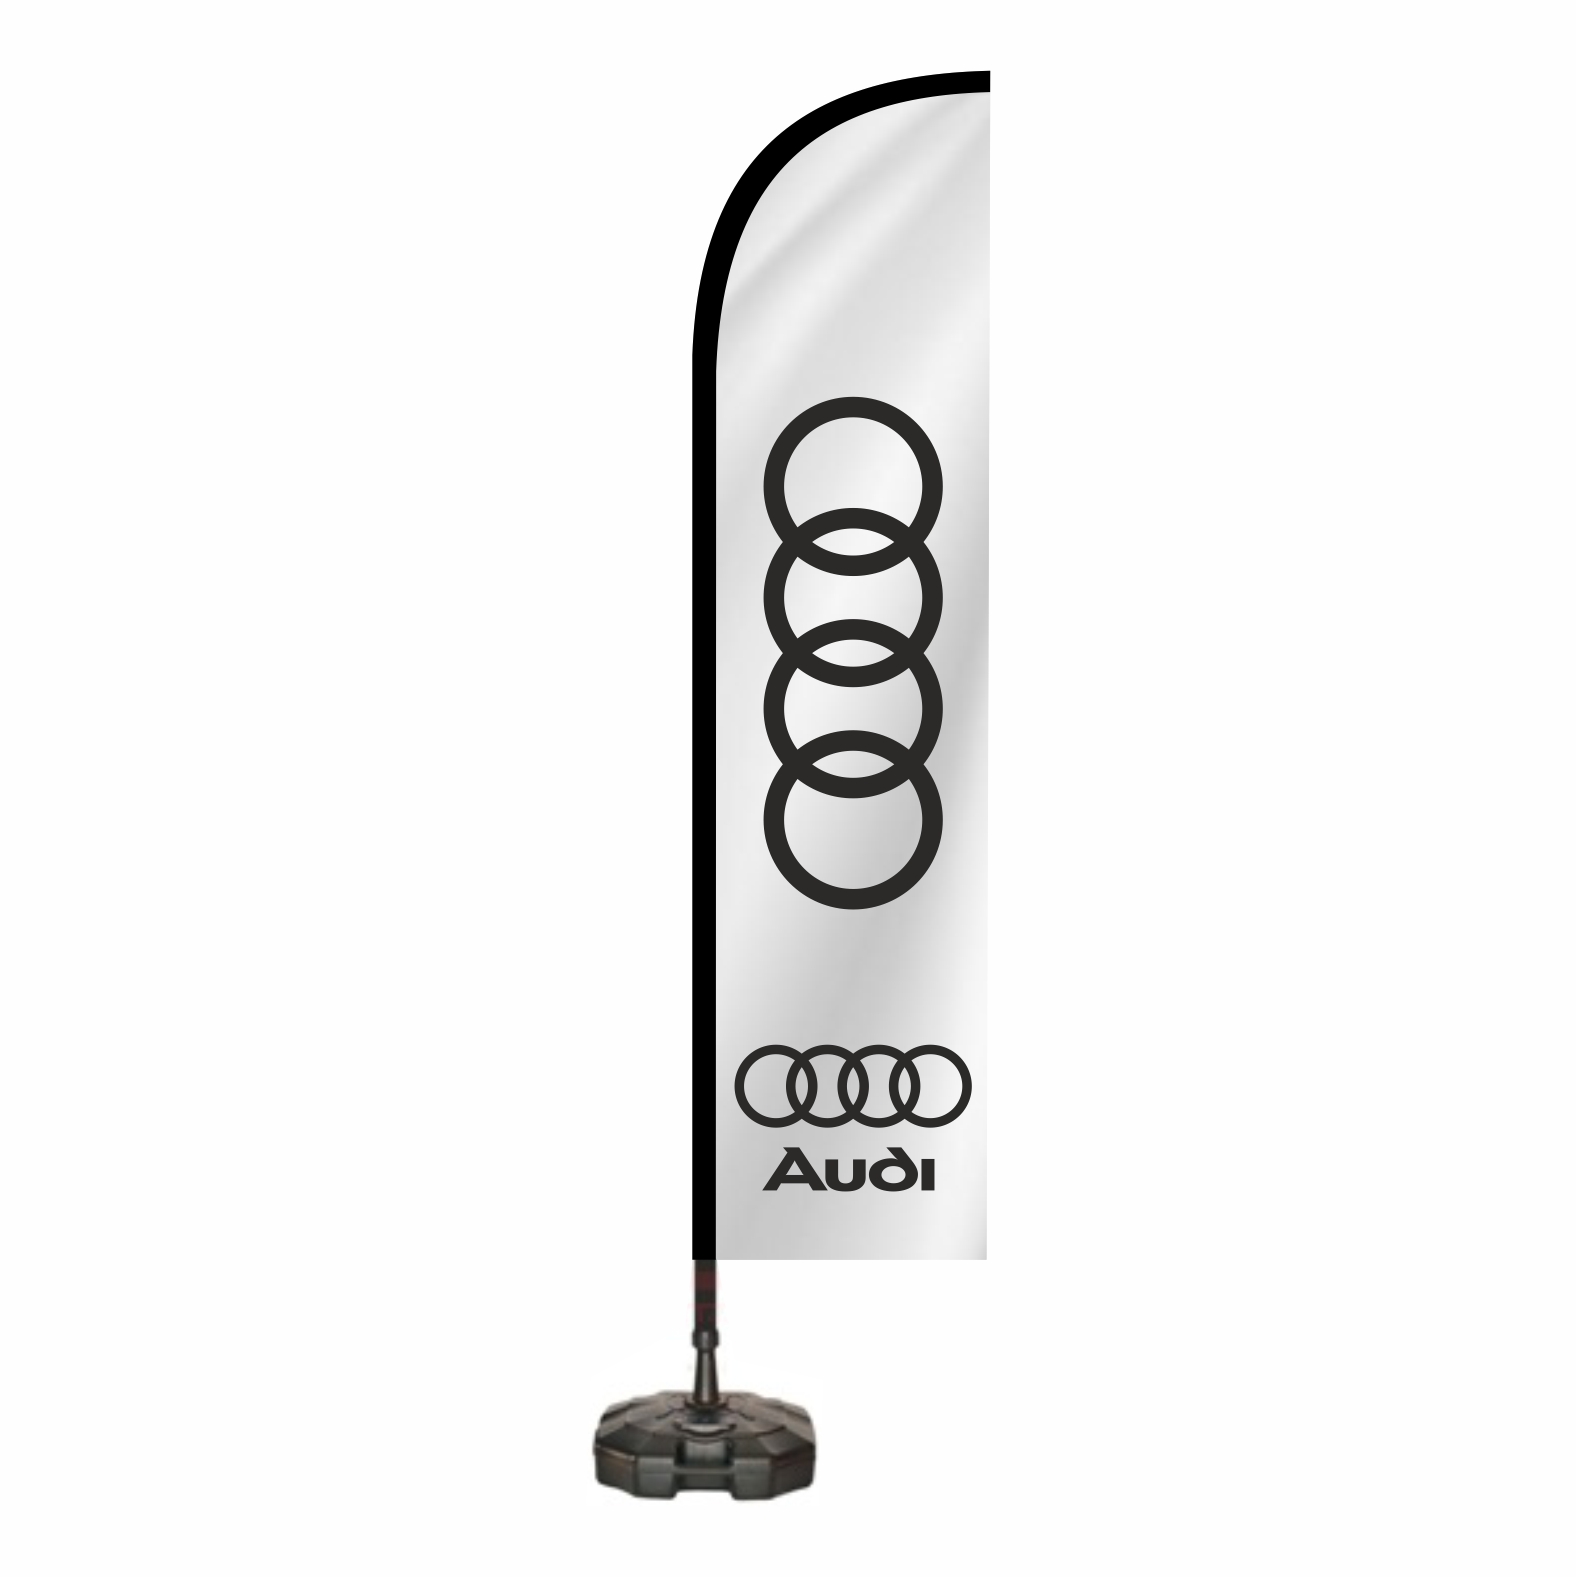 Audi Yapan Firmalar